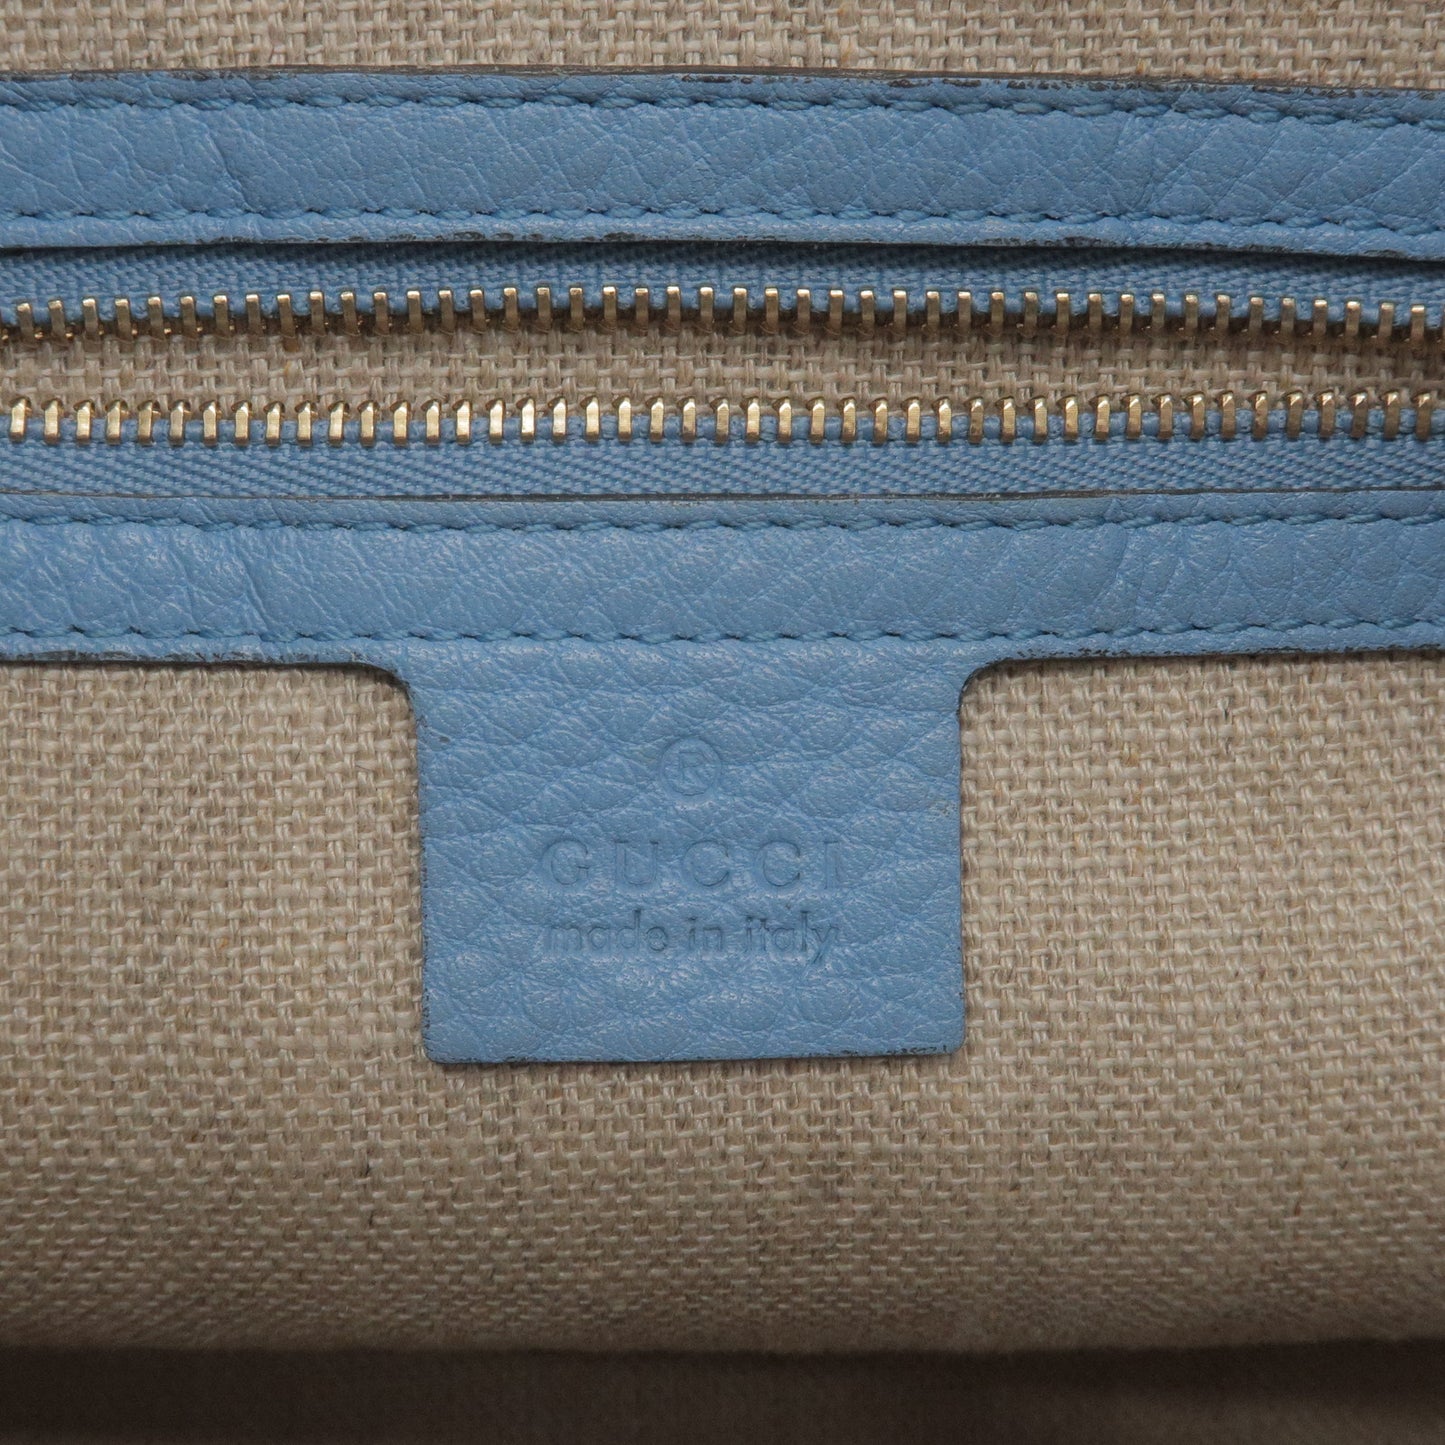 GUCCI GG Canvas Leather Drawstring Shoulder Bag Blue 381597